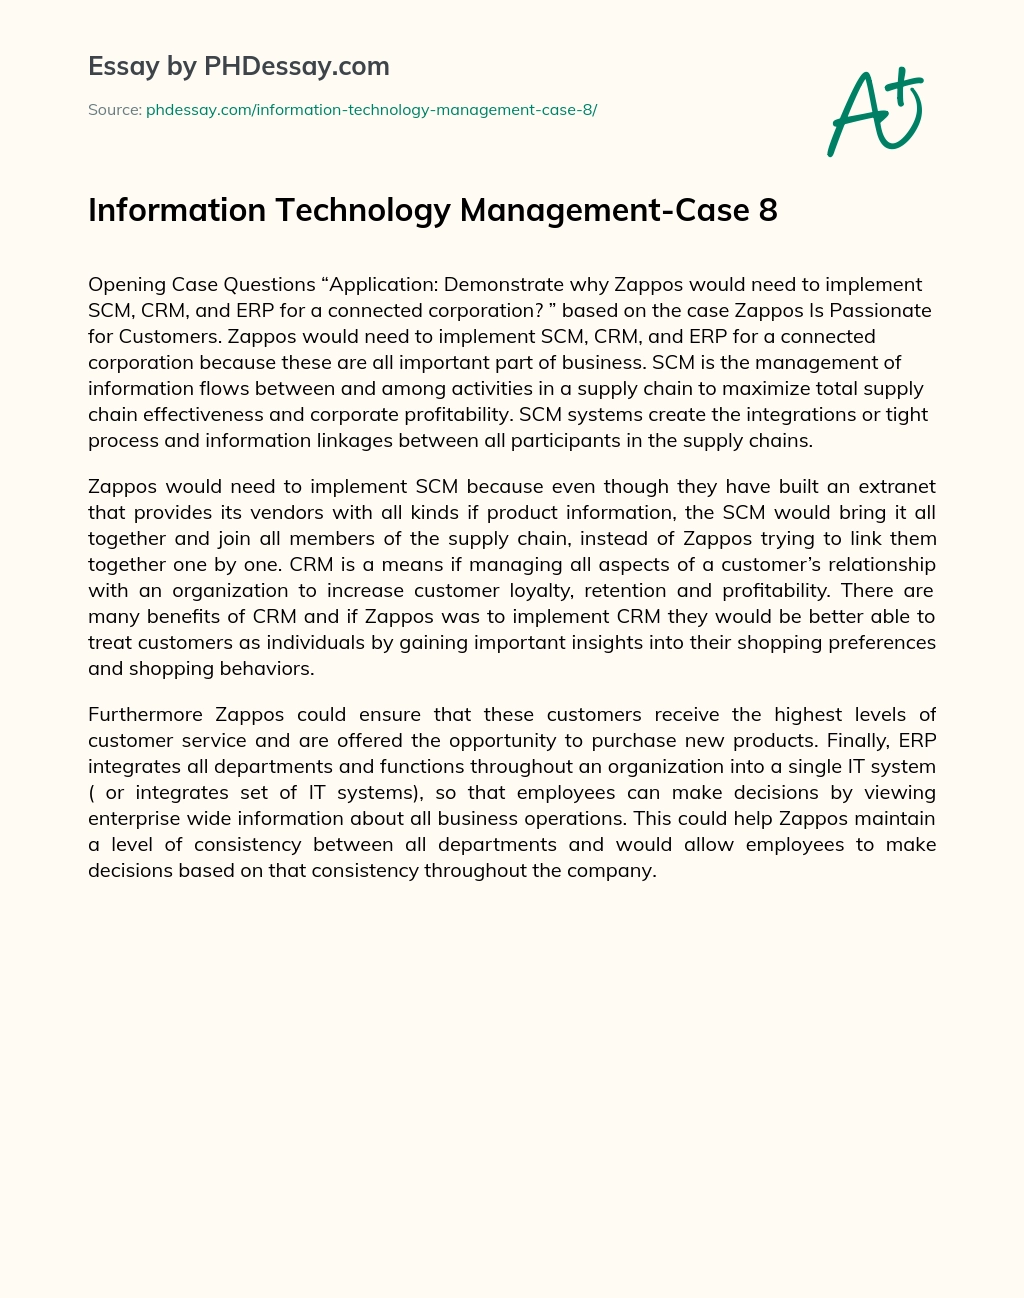 Information Technology Management-Case 8 essay